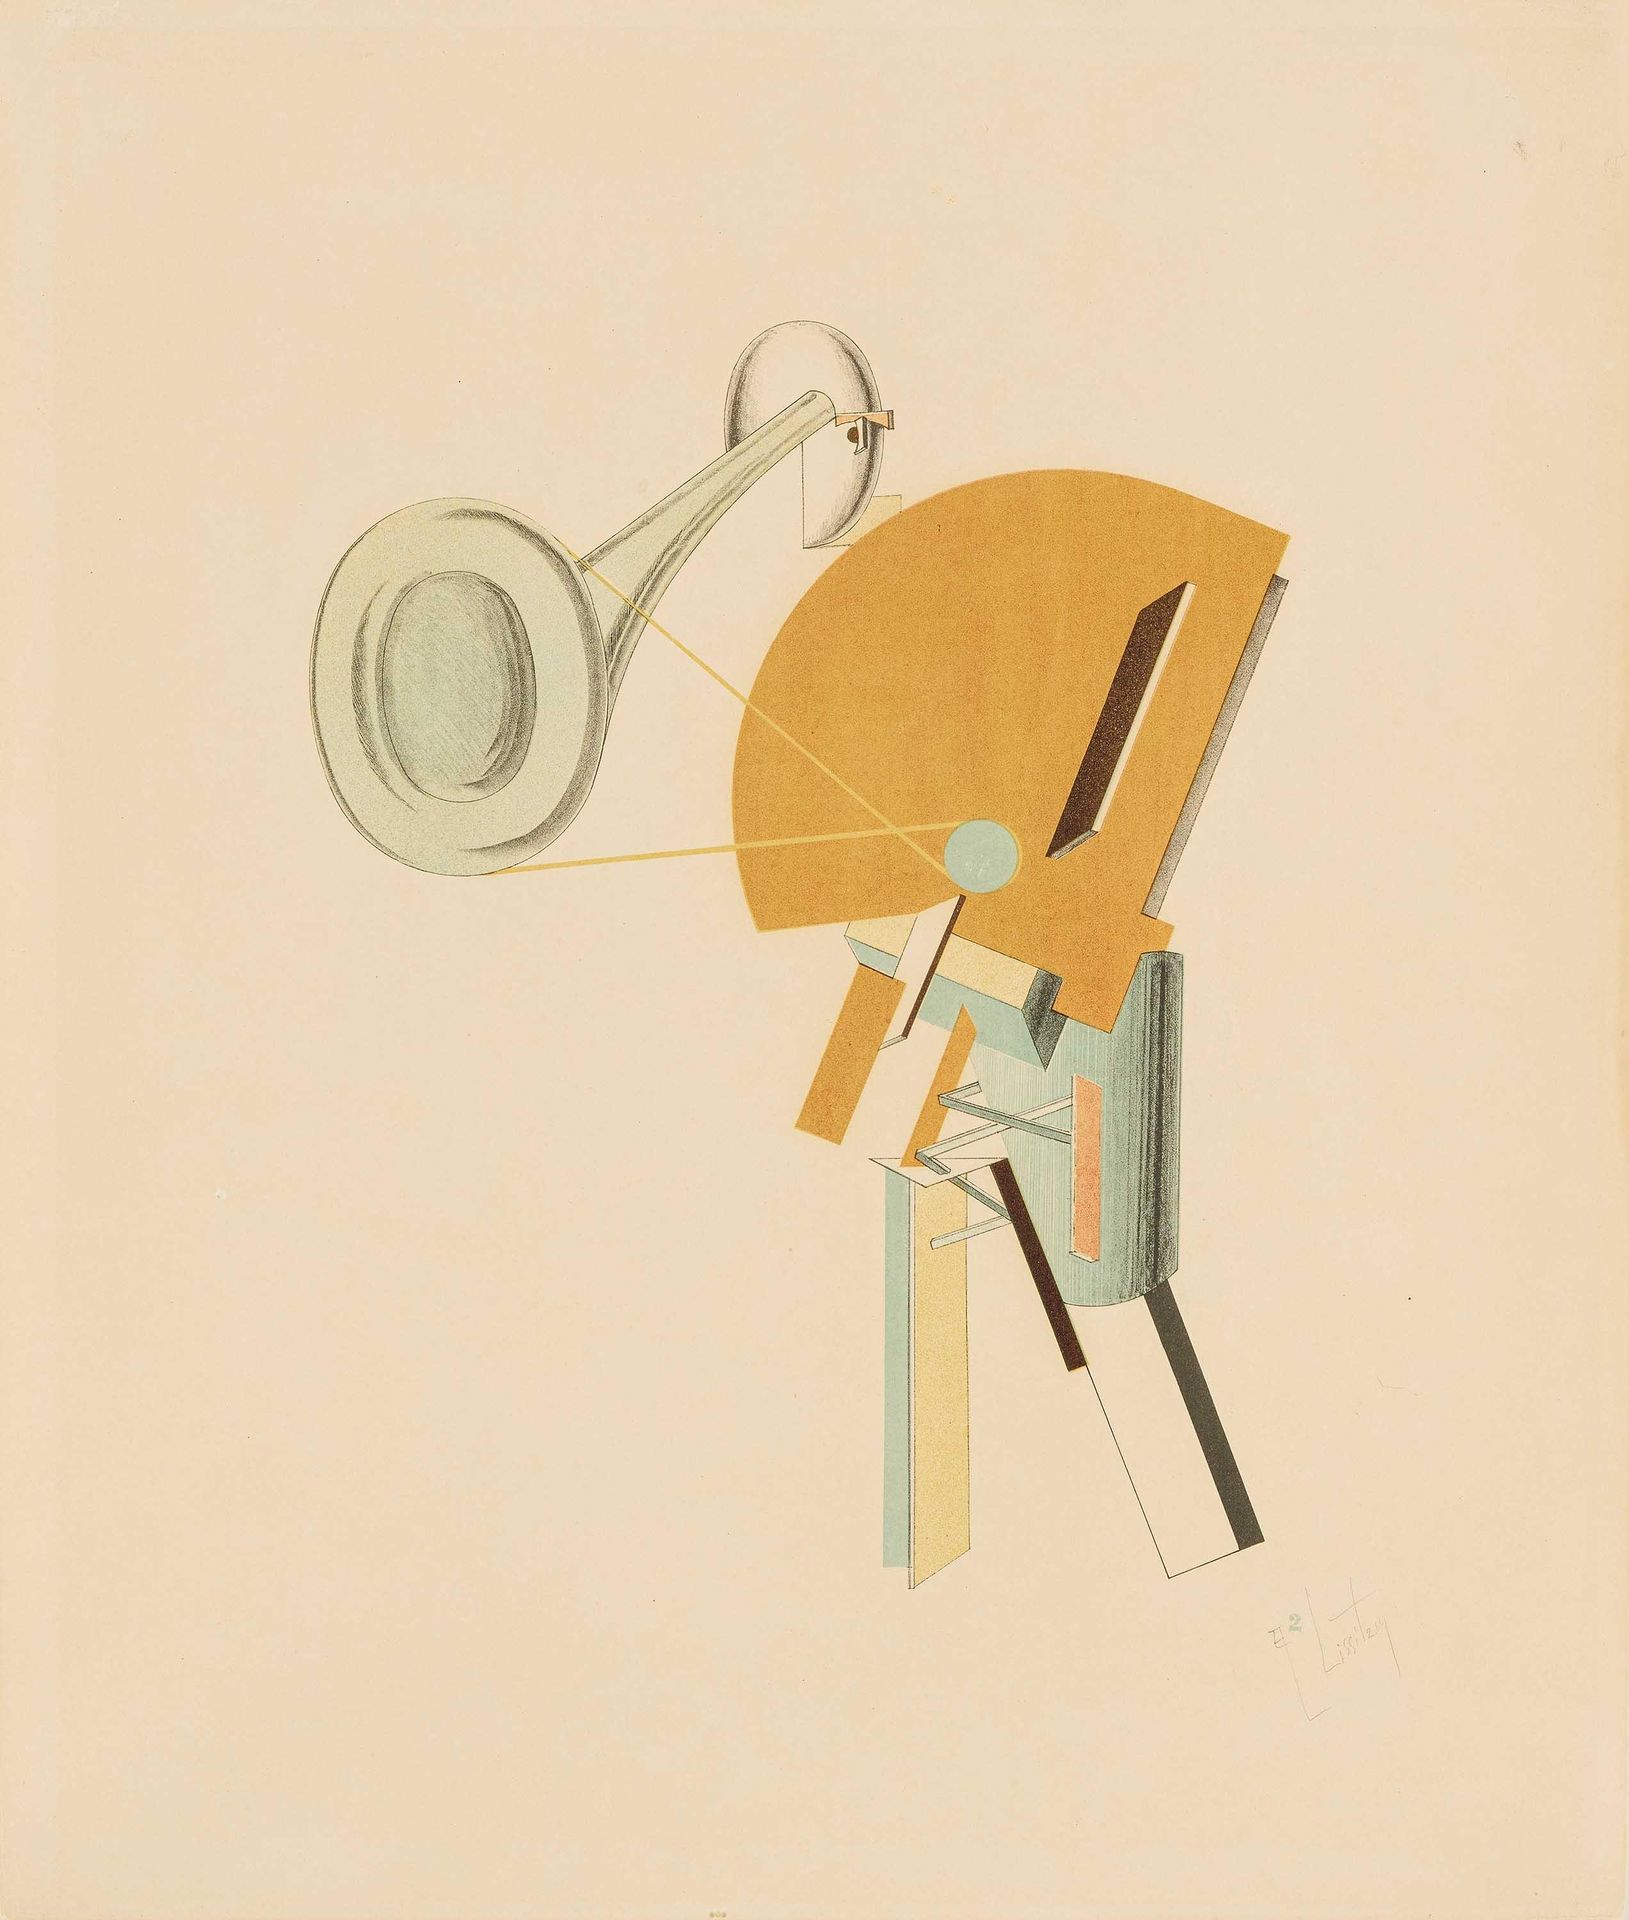 El Lissitzky LISSITZKY, EL
1890 Potschinok/Smolensk - 1941 Moscow

Title: Ansage&hellip;